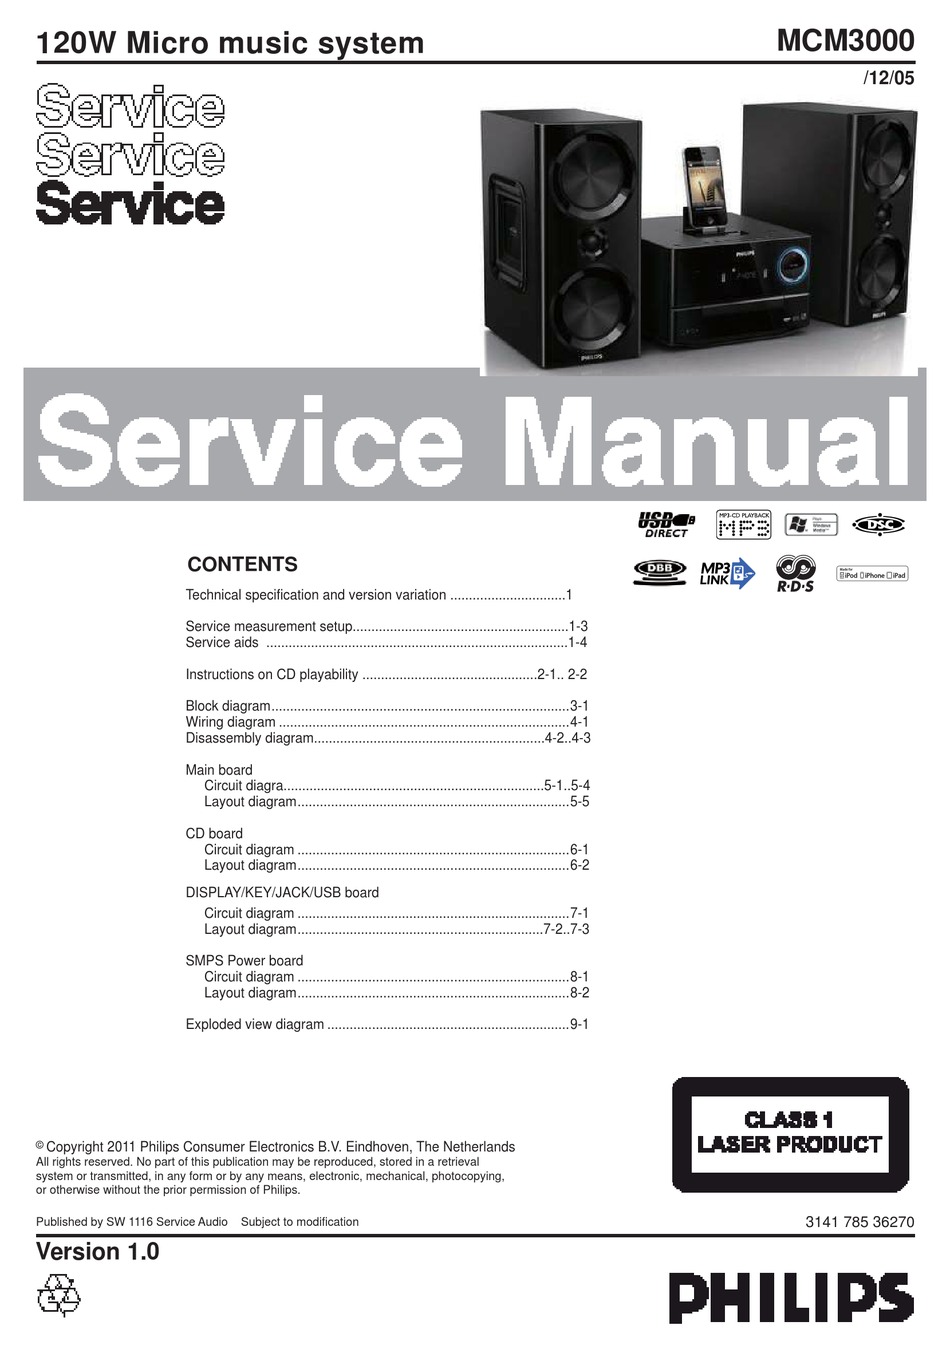 PHILIPS MCM3000 SERVICE MANUAL Pdf Download | ManualsLib